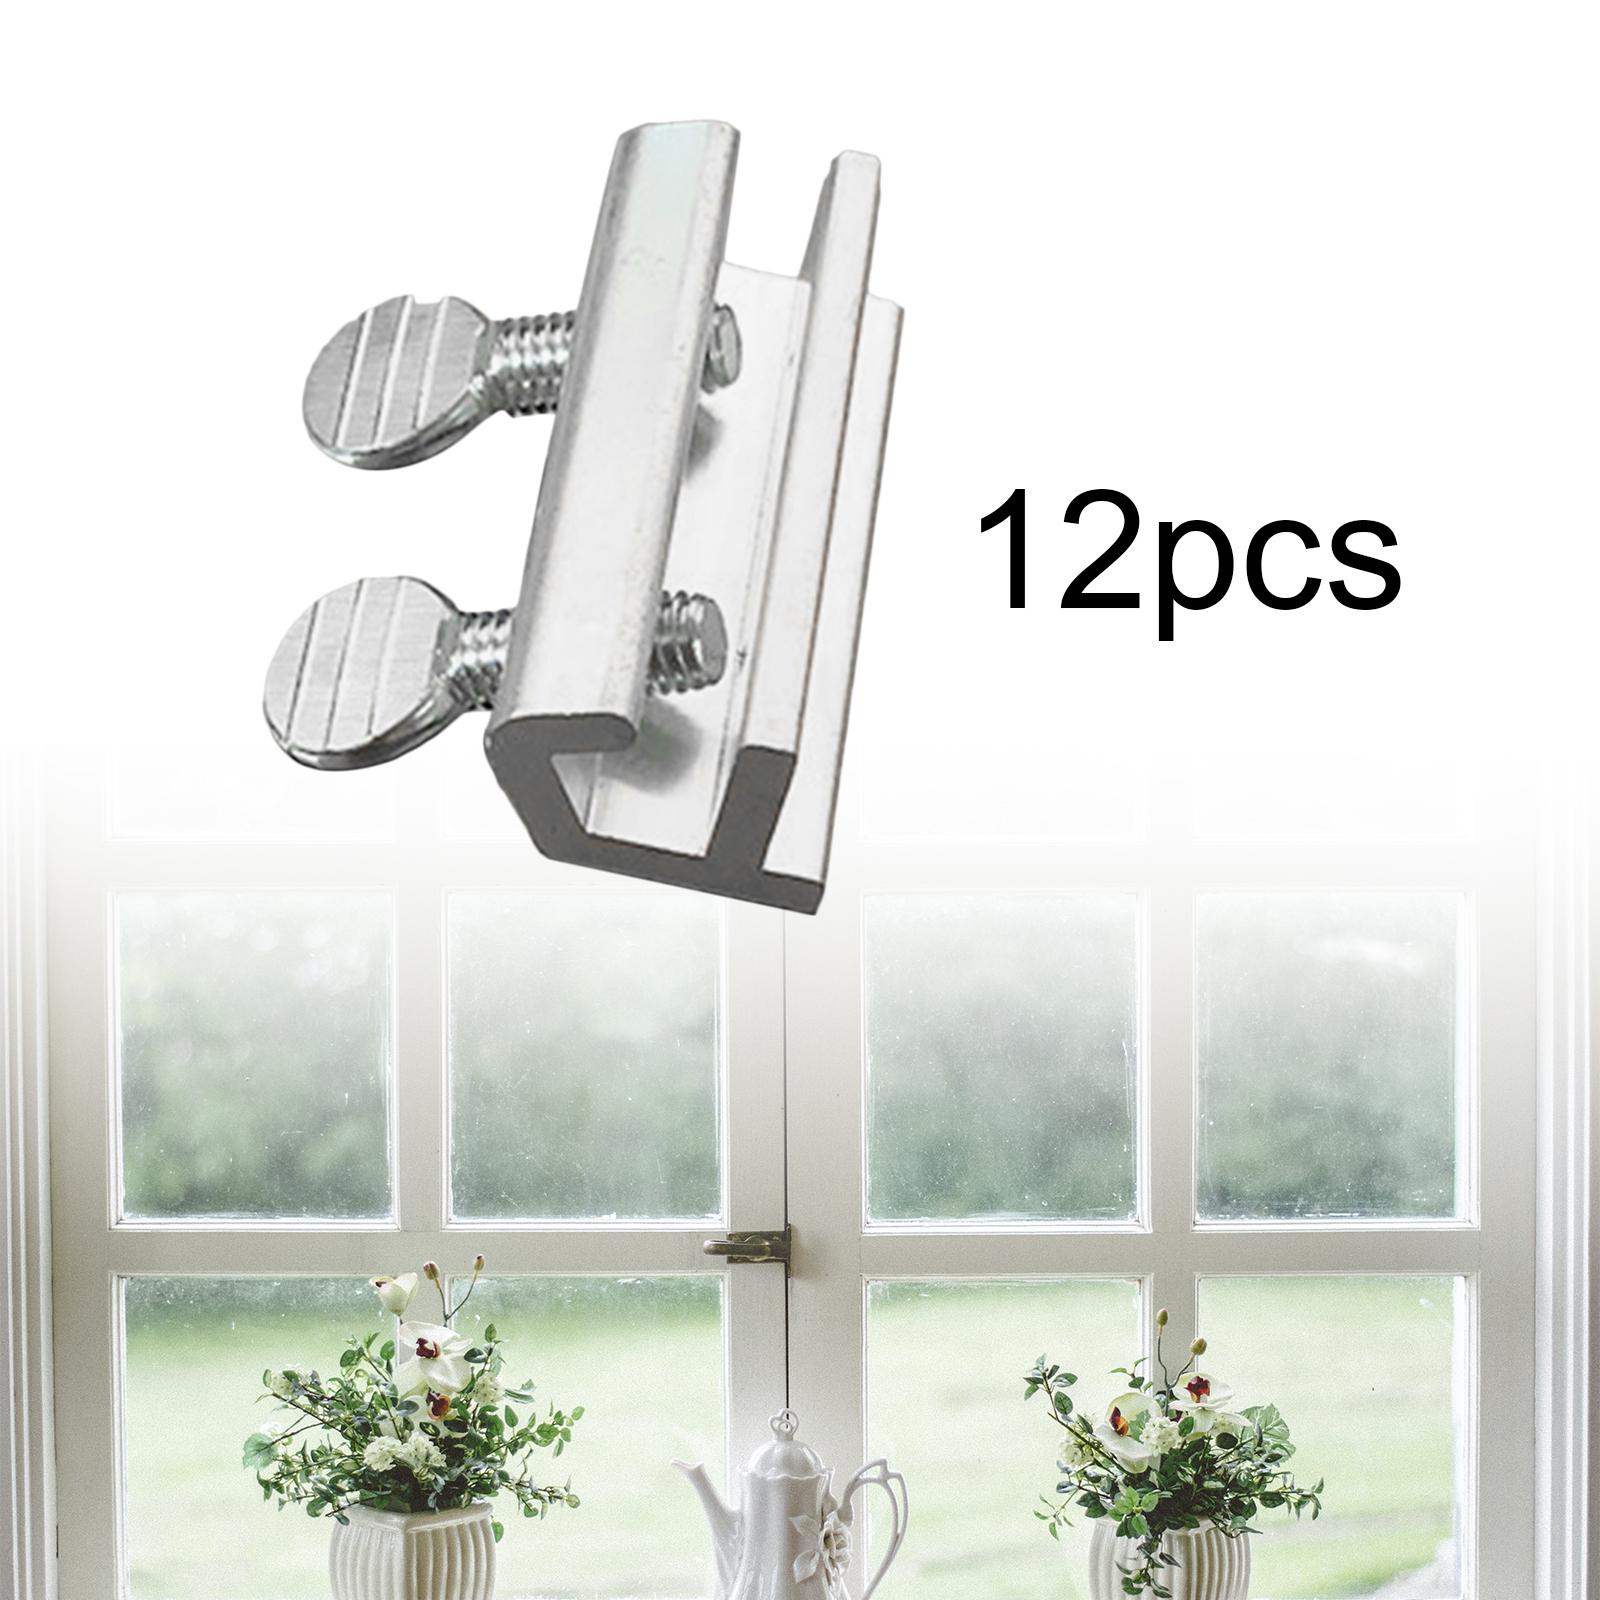 Sliding Door Window Locks Round Handle Safety for Window Cabinet Living Room